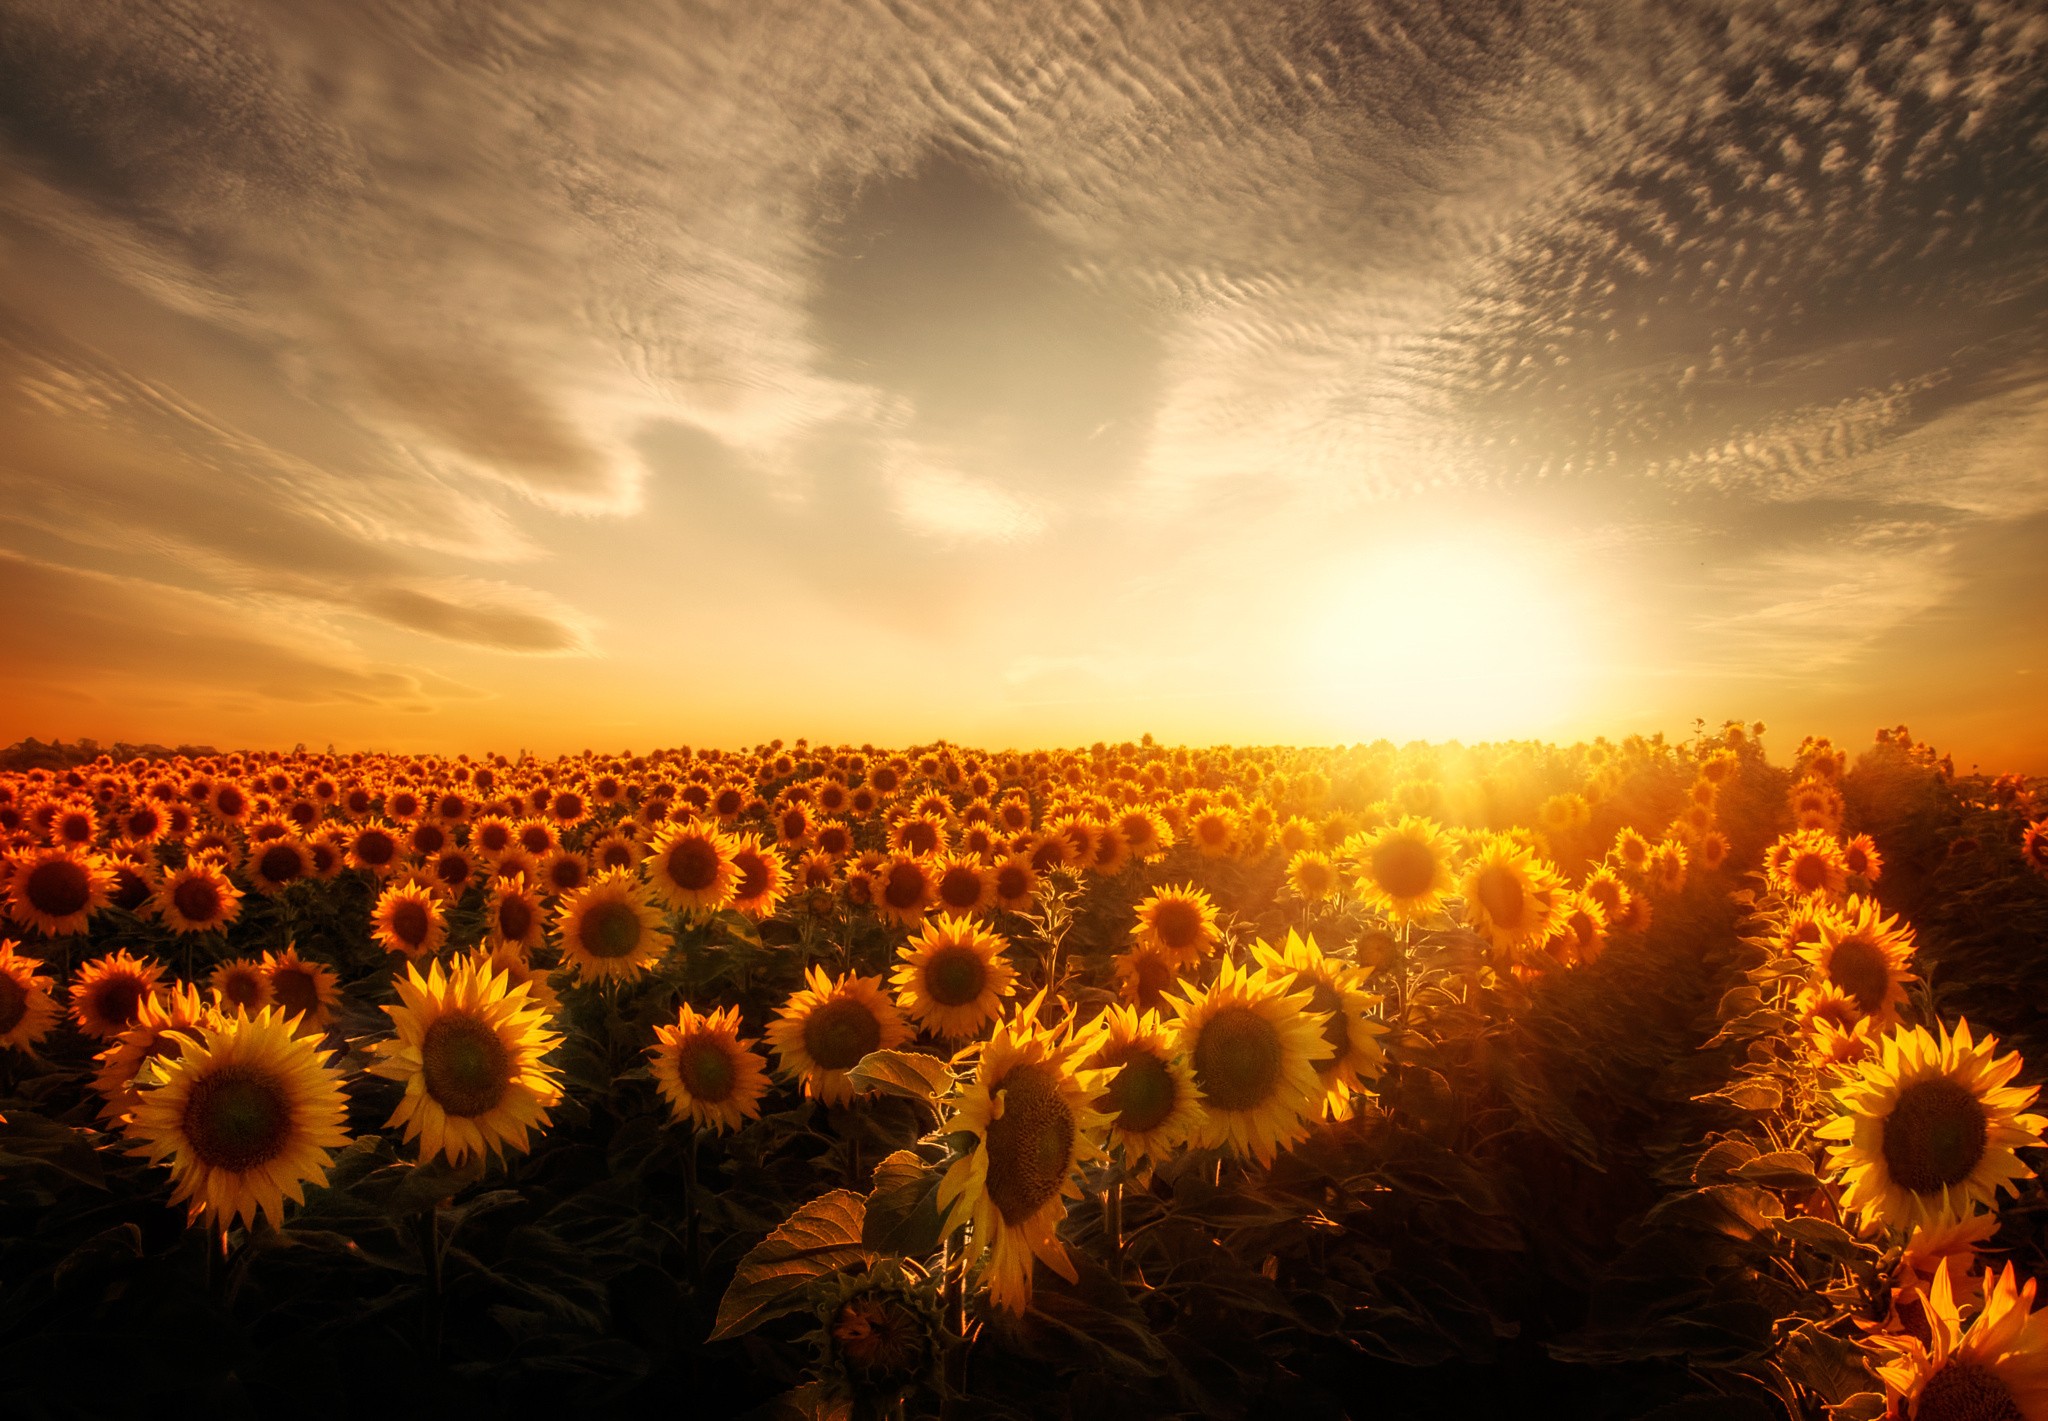 General 2048x1421 sunflowers sunset Agro (Plants) field flowers plants sky sunlight outdoors yellow flowers